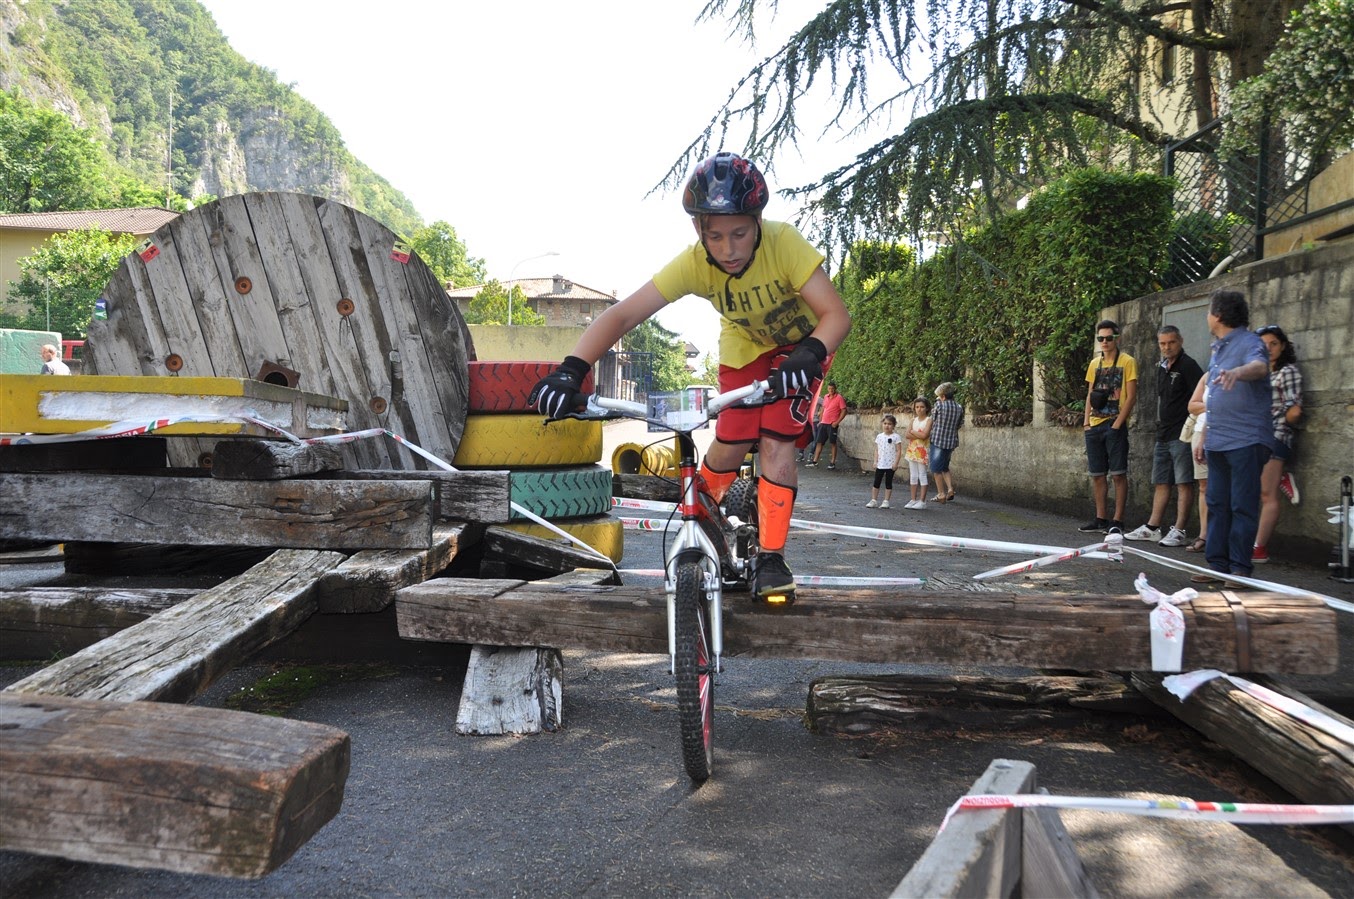 Bike Trial 03 Lug 2016 Piancogno (1) - 2016 - CIBT - Piancogno